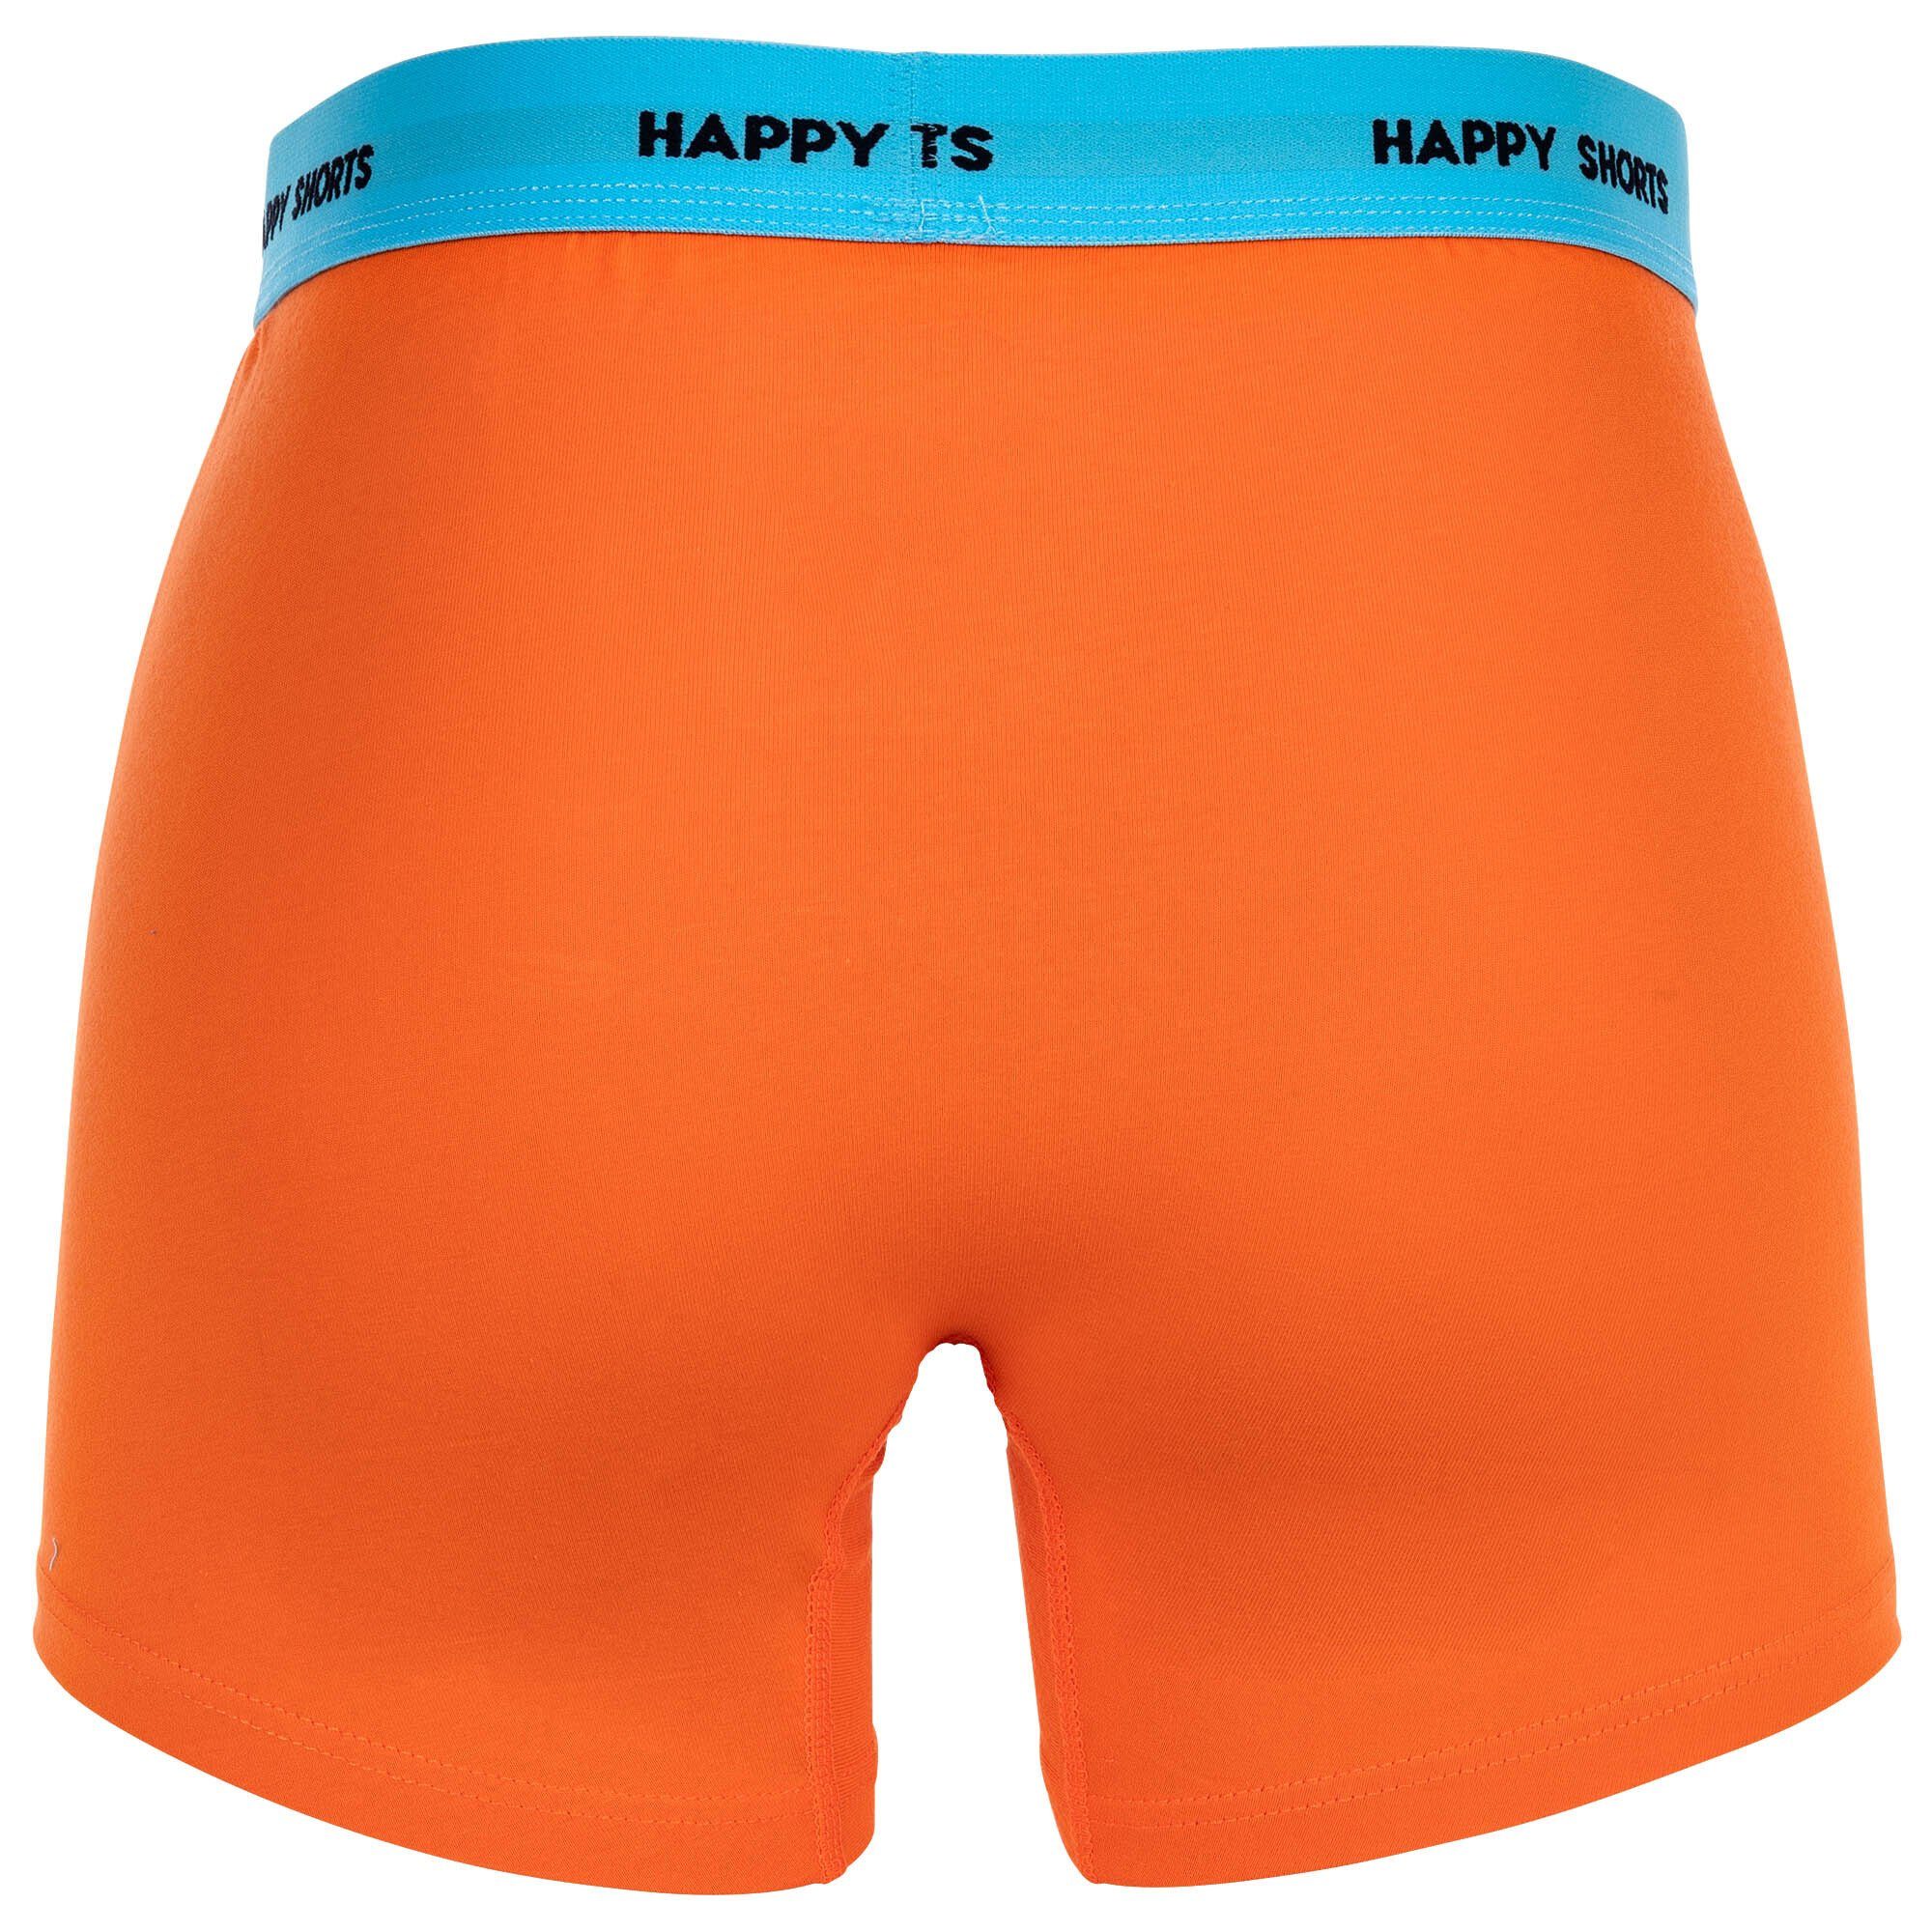 HAPPY SHORTS Boxer Herren - 3er Boxershorts, Jersey Pack Blau/Orange/Türkis Retro